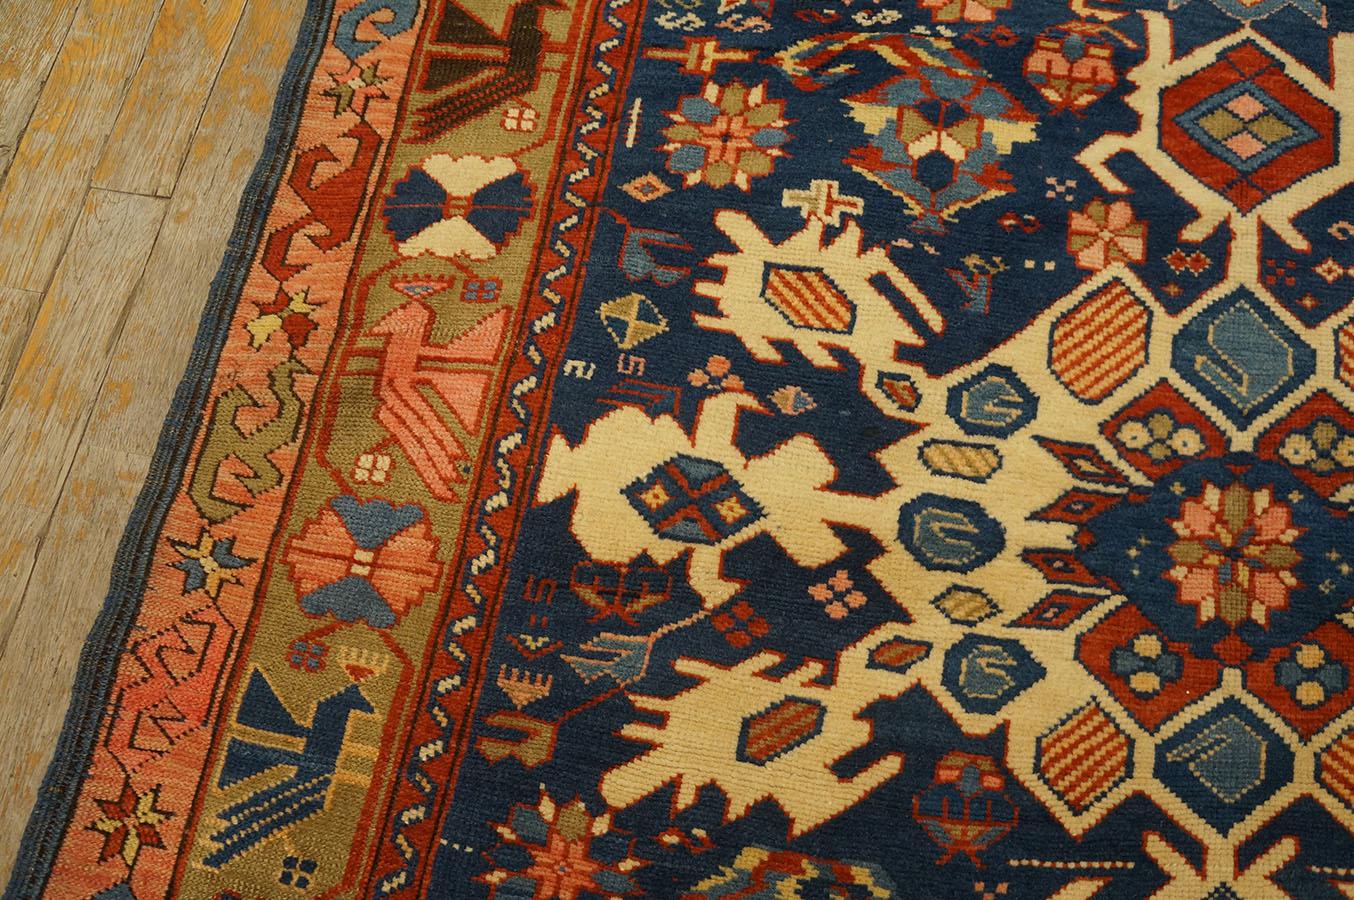 Late 19th Century Caucasian Bidjov Carpet ( 4'6'' x 5'8'' - 122 x 183 cm) For Sale 2